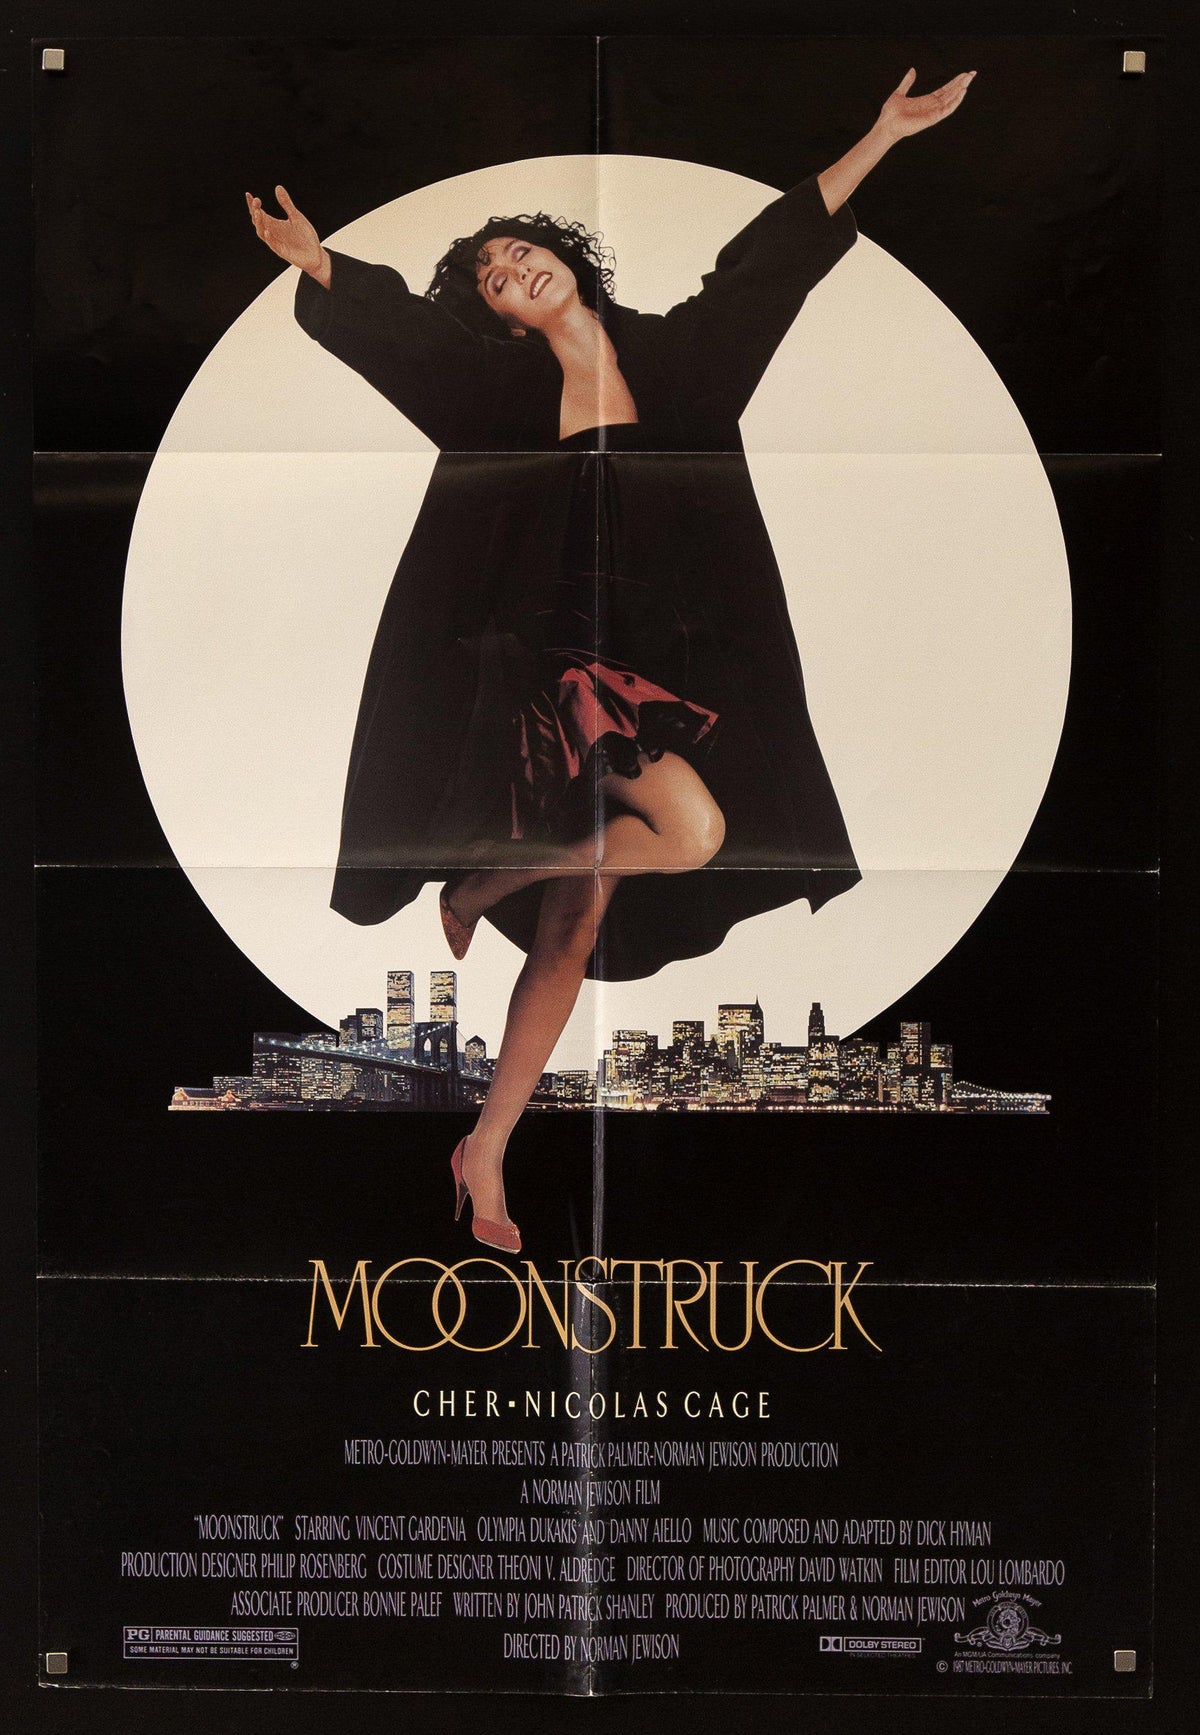 Moonstruck 1 Sheet (27x41) Original Vintage Movie Poster